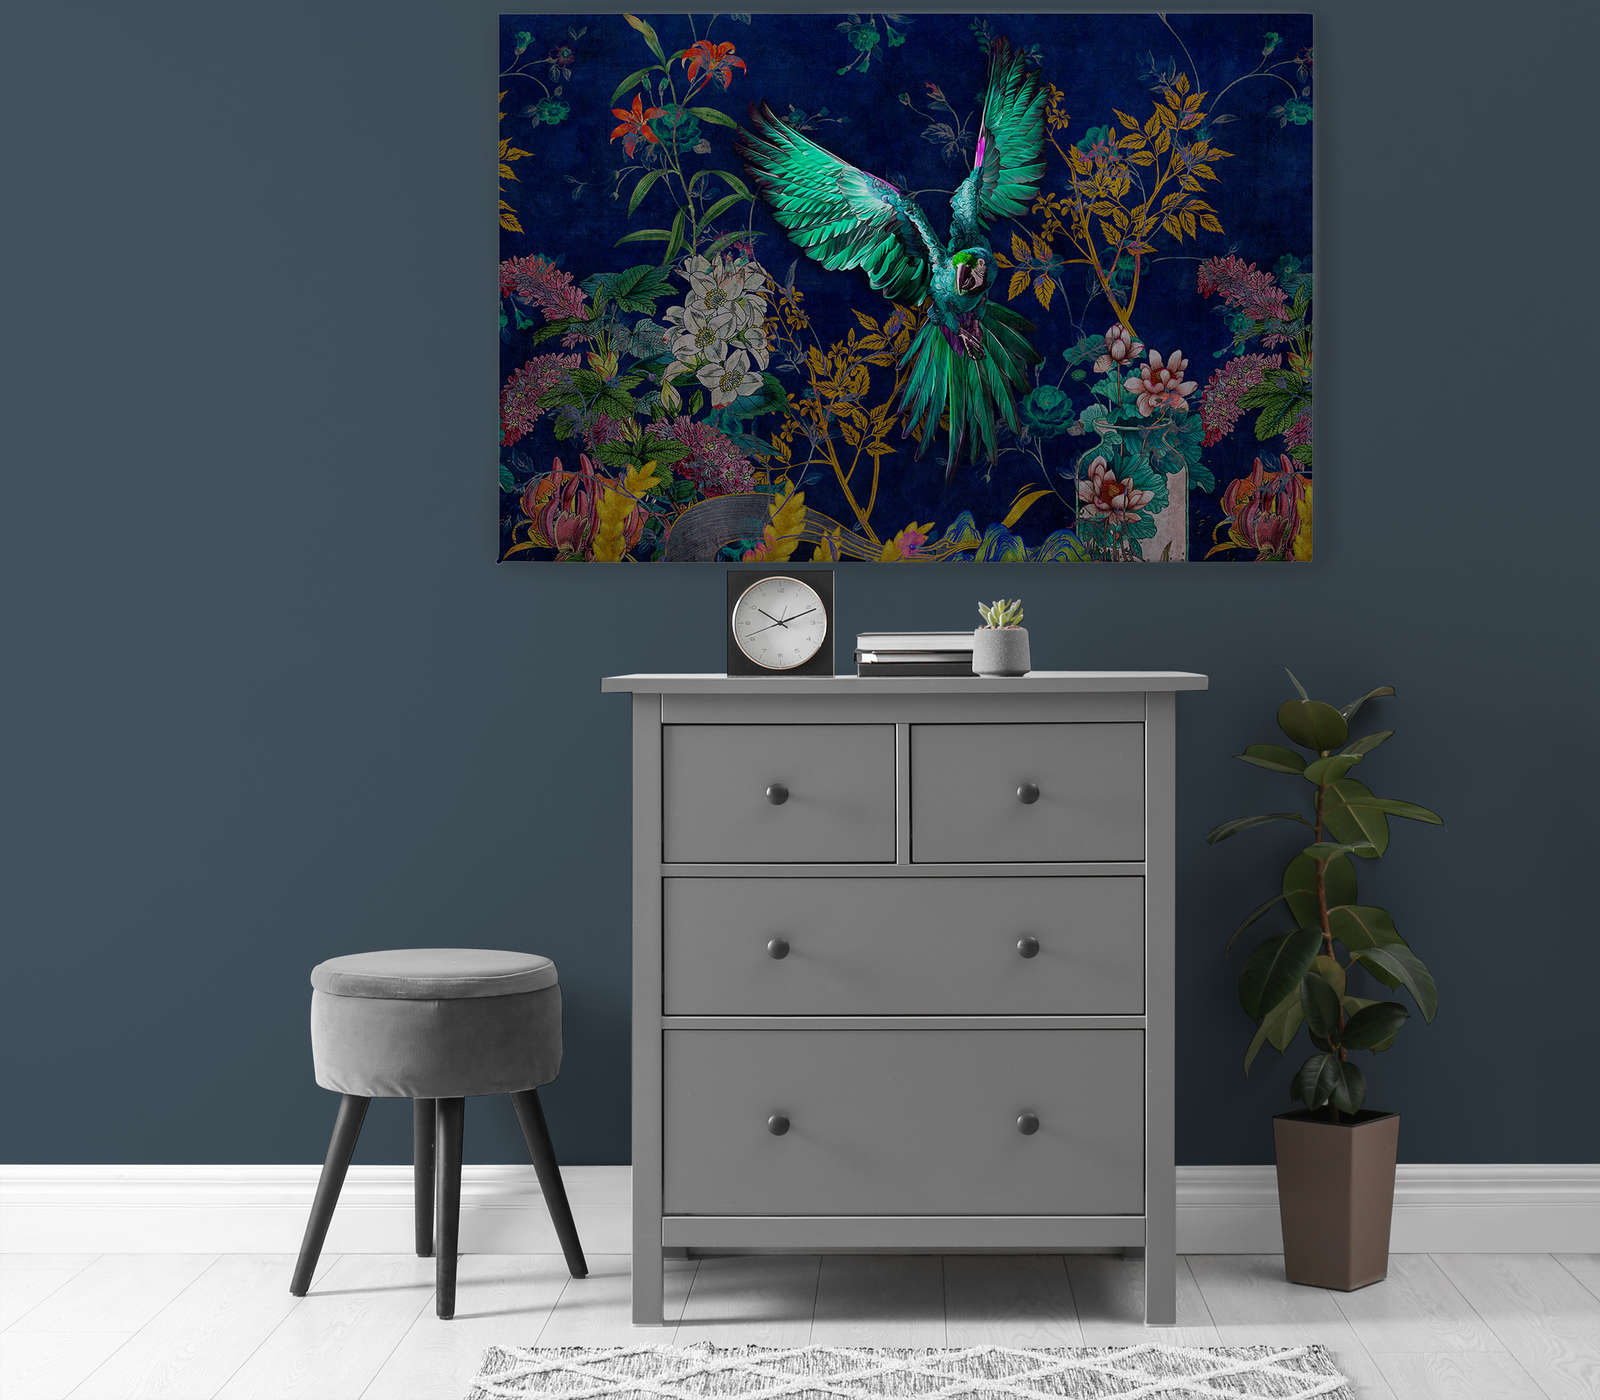             Tropical Hero 1 - Leinwandbild Blumen & Papagei intensive Farben – 1,20 m x 0,80 m
        